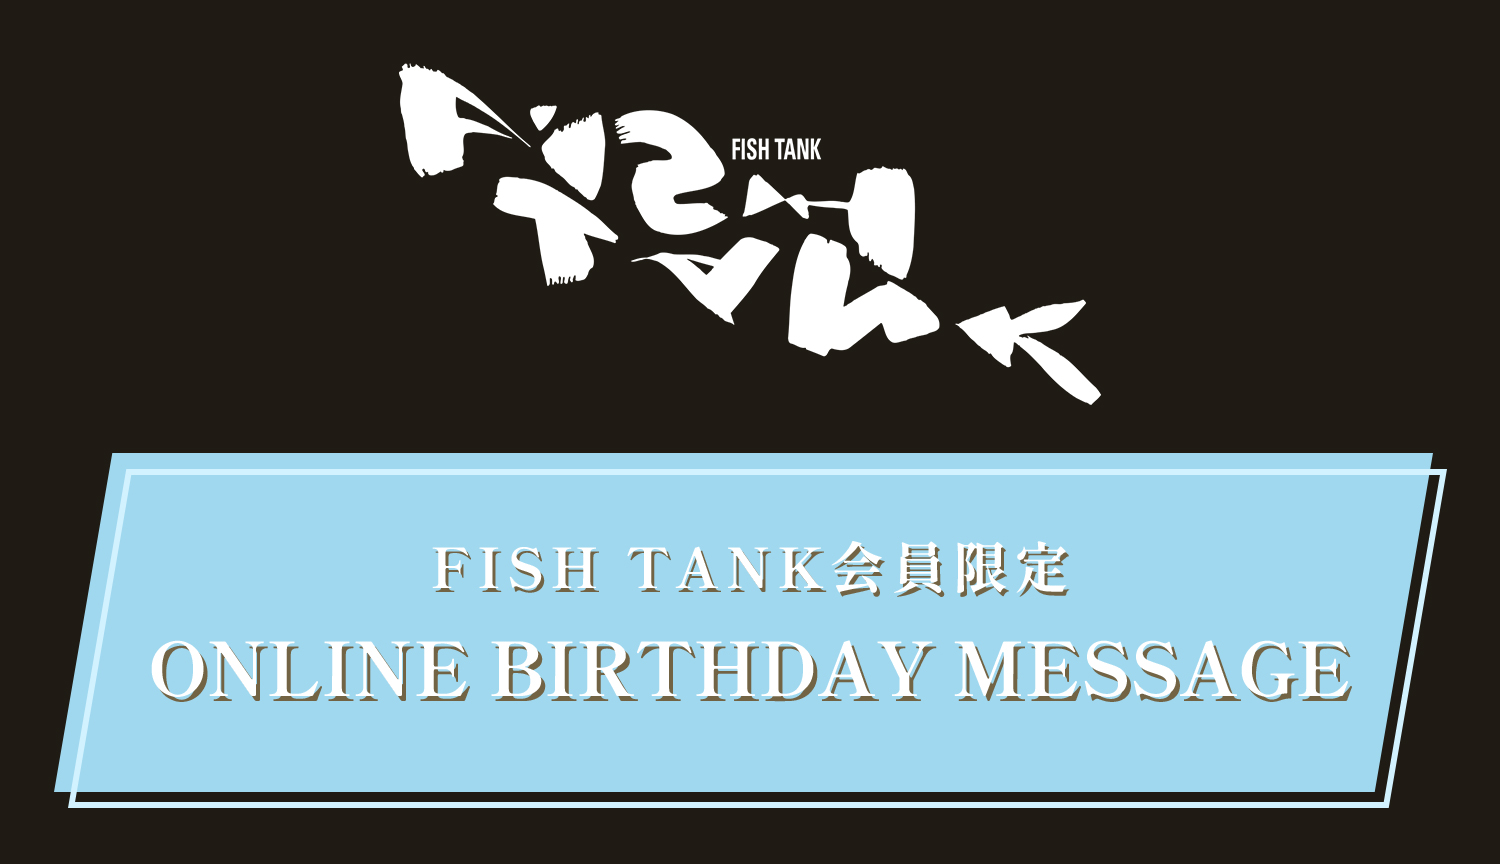 FISH TANK会員限定「HIGUCHI YUTAKA ONLINE BIRTHDAY MESSAGE」募集のお知らせ